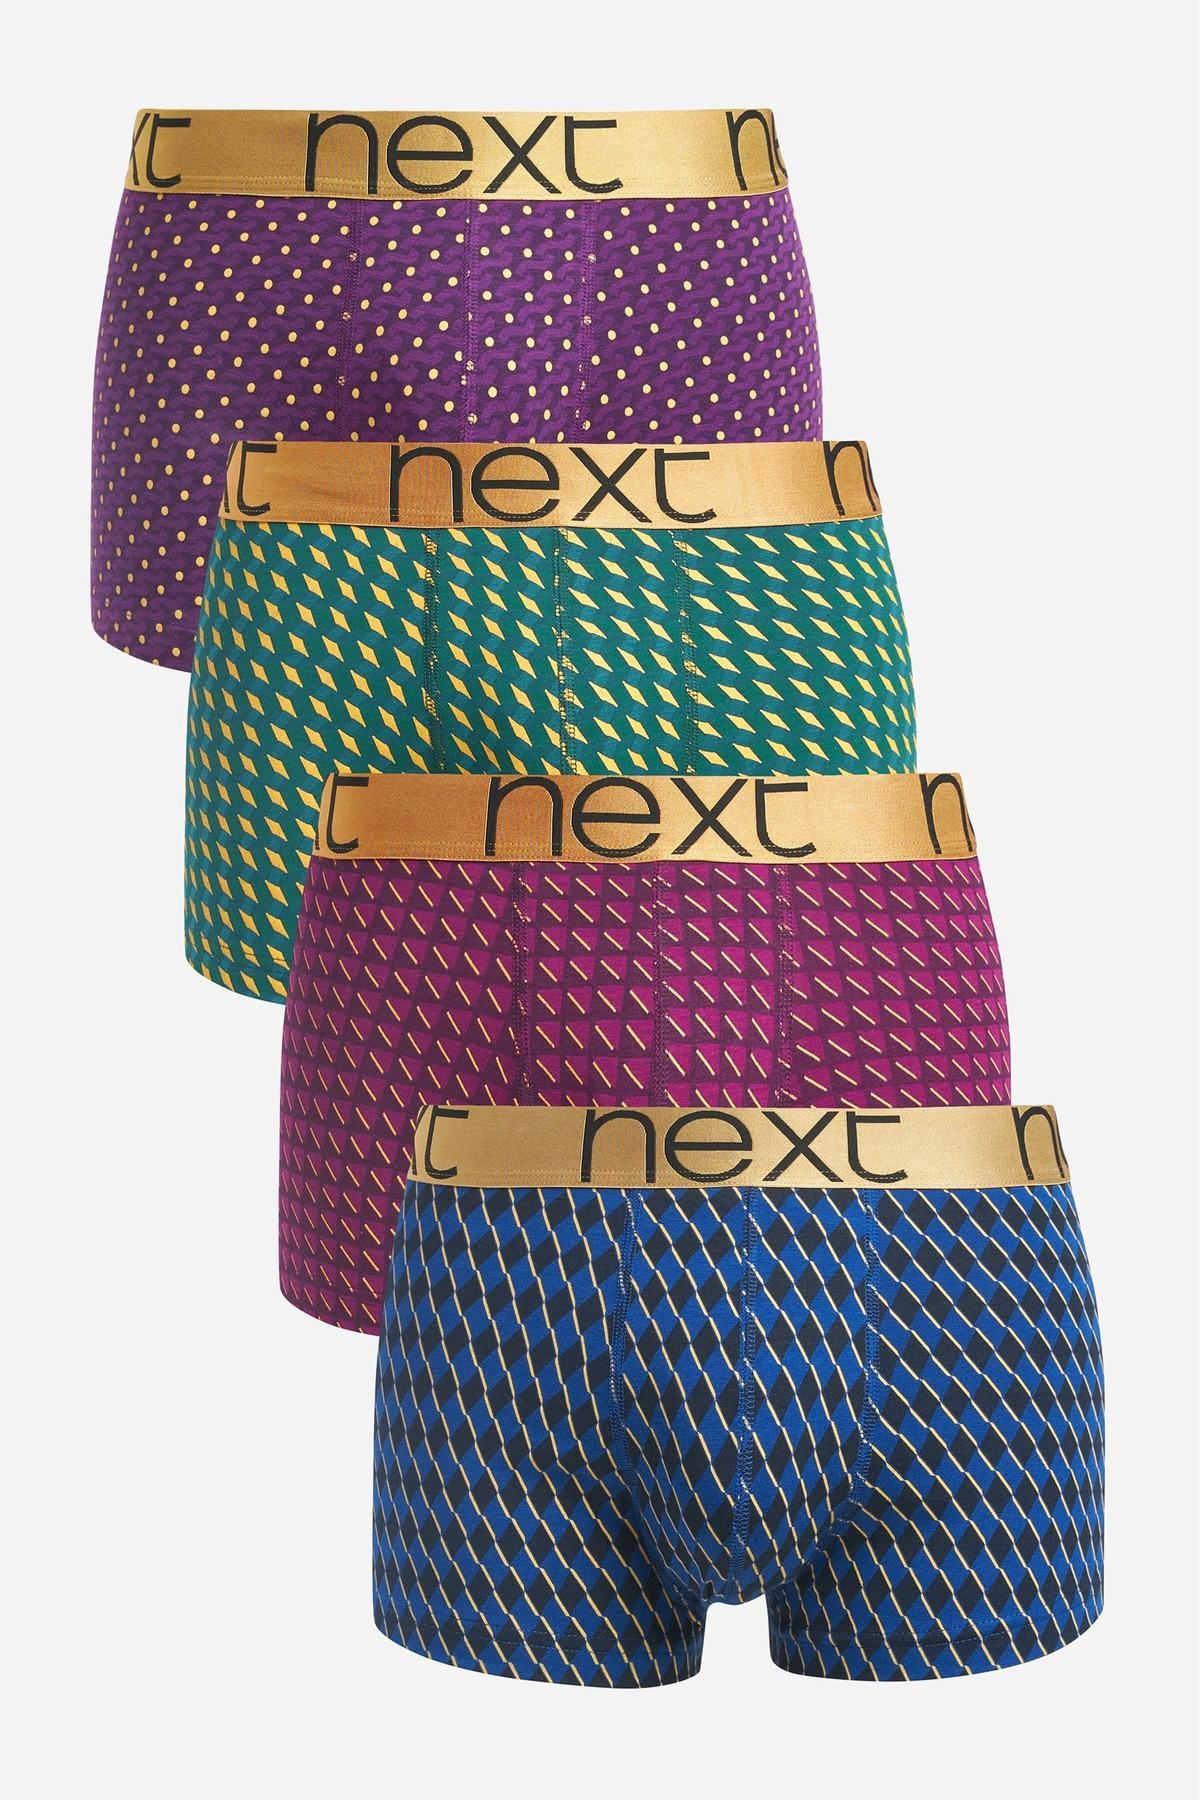 NEXT Hipsters 4 Pack Multi Men Underwears|akgalleria.com